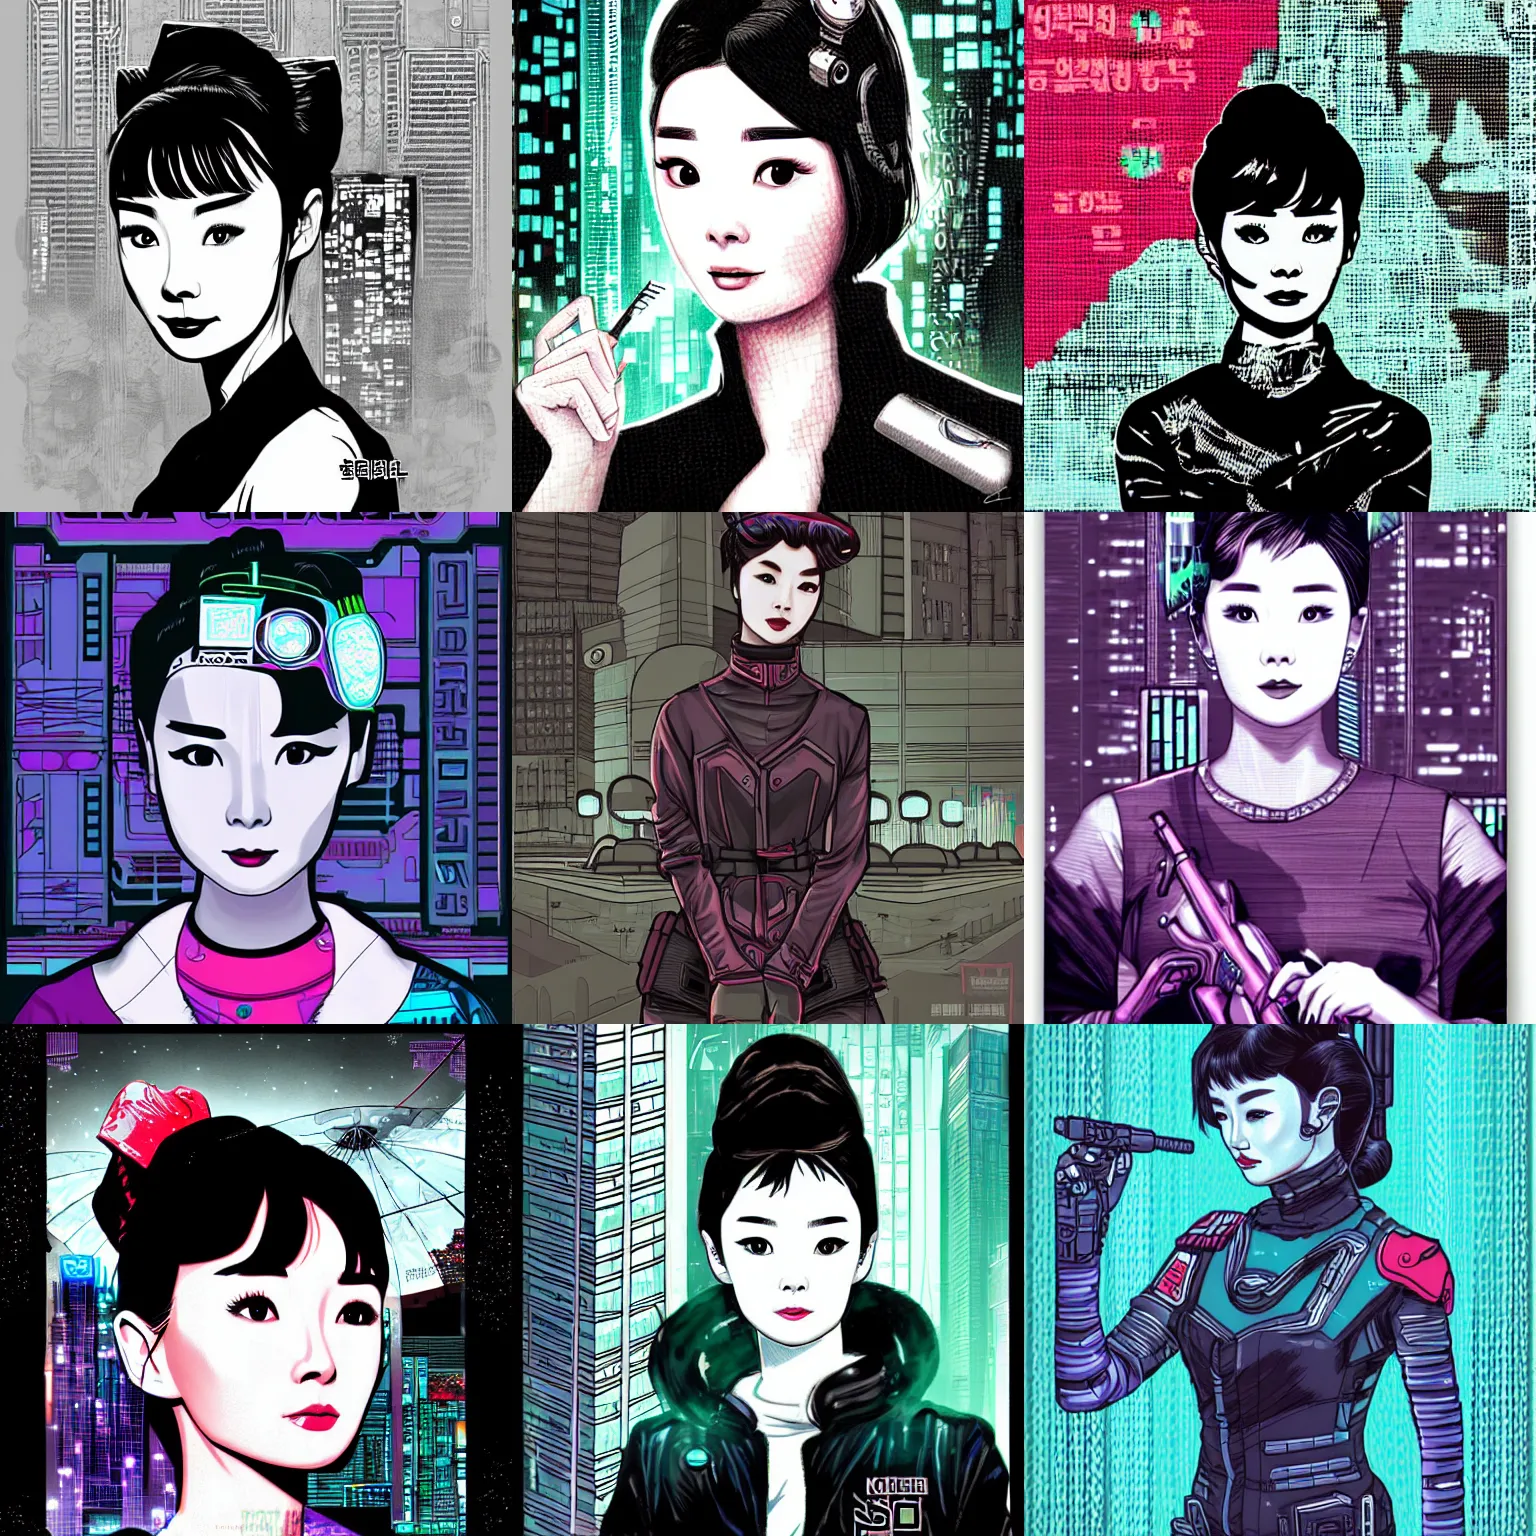 Prompt: korean audrey hepburn, detailed cyberpunk gaia portrait by tim doyle